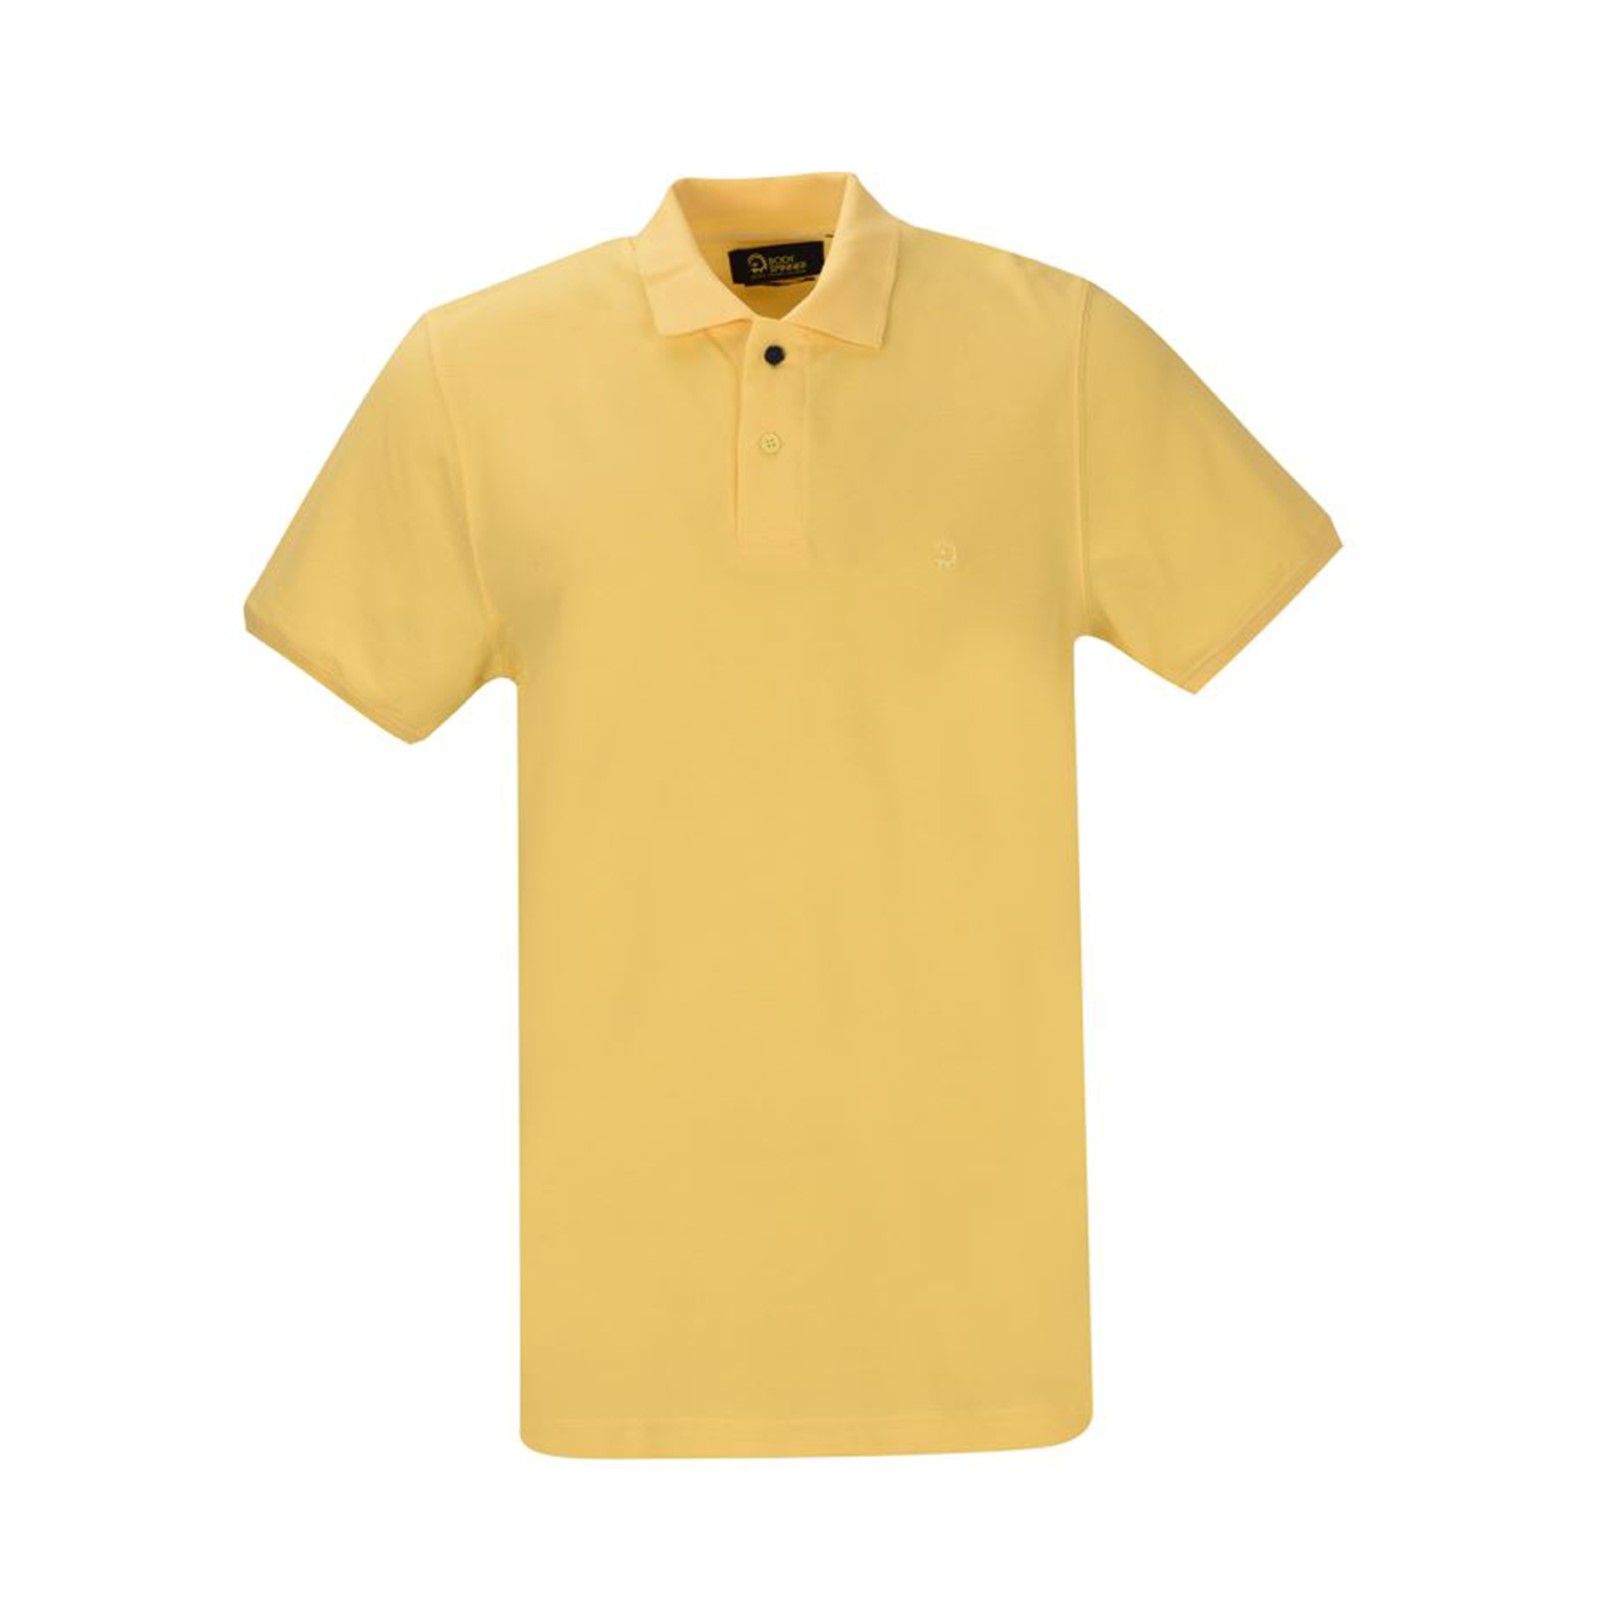 پولوشرت آستین کوتاه مردانه بادی اسپینر مدل 06960358 کد 2 رنگ زرد